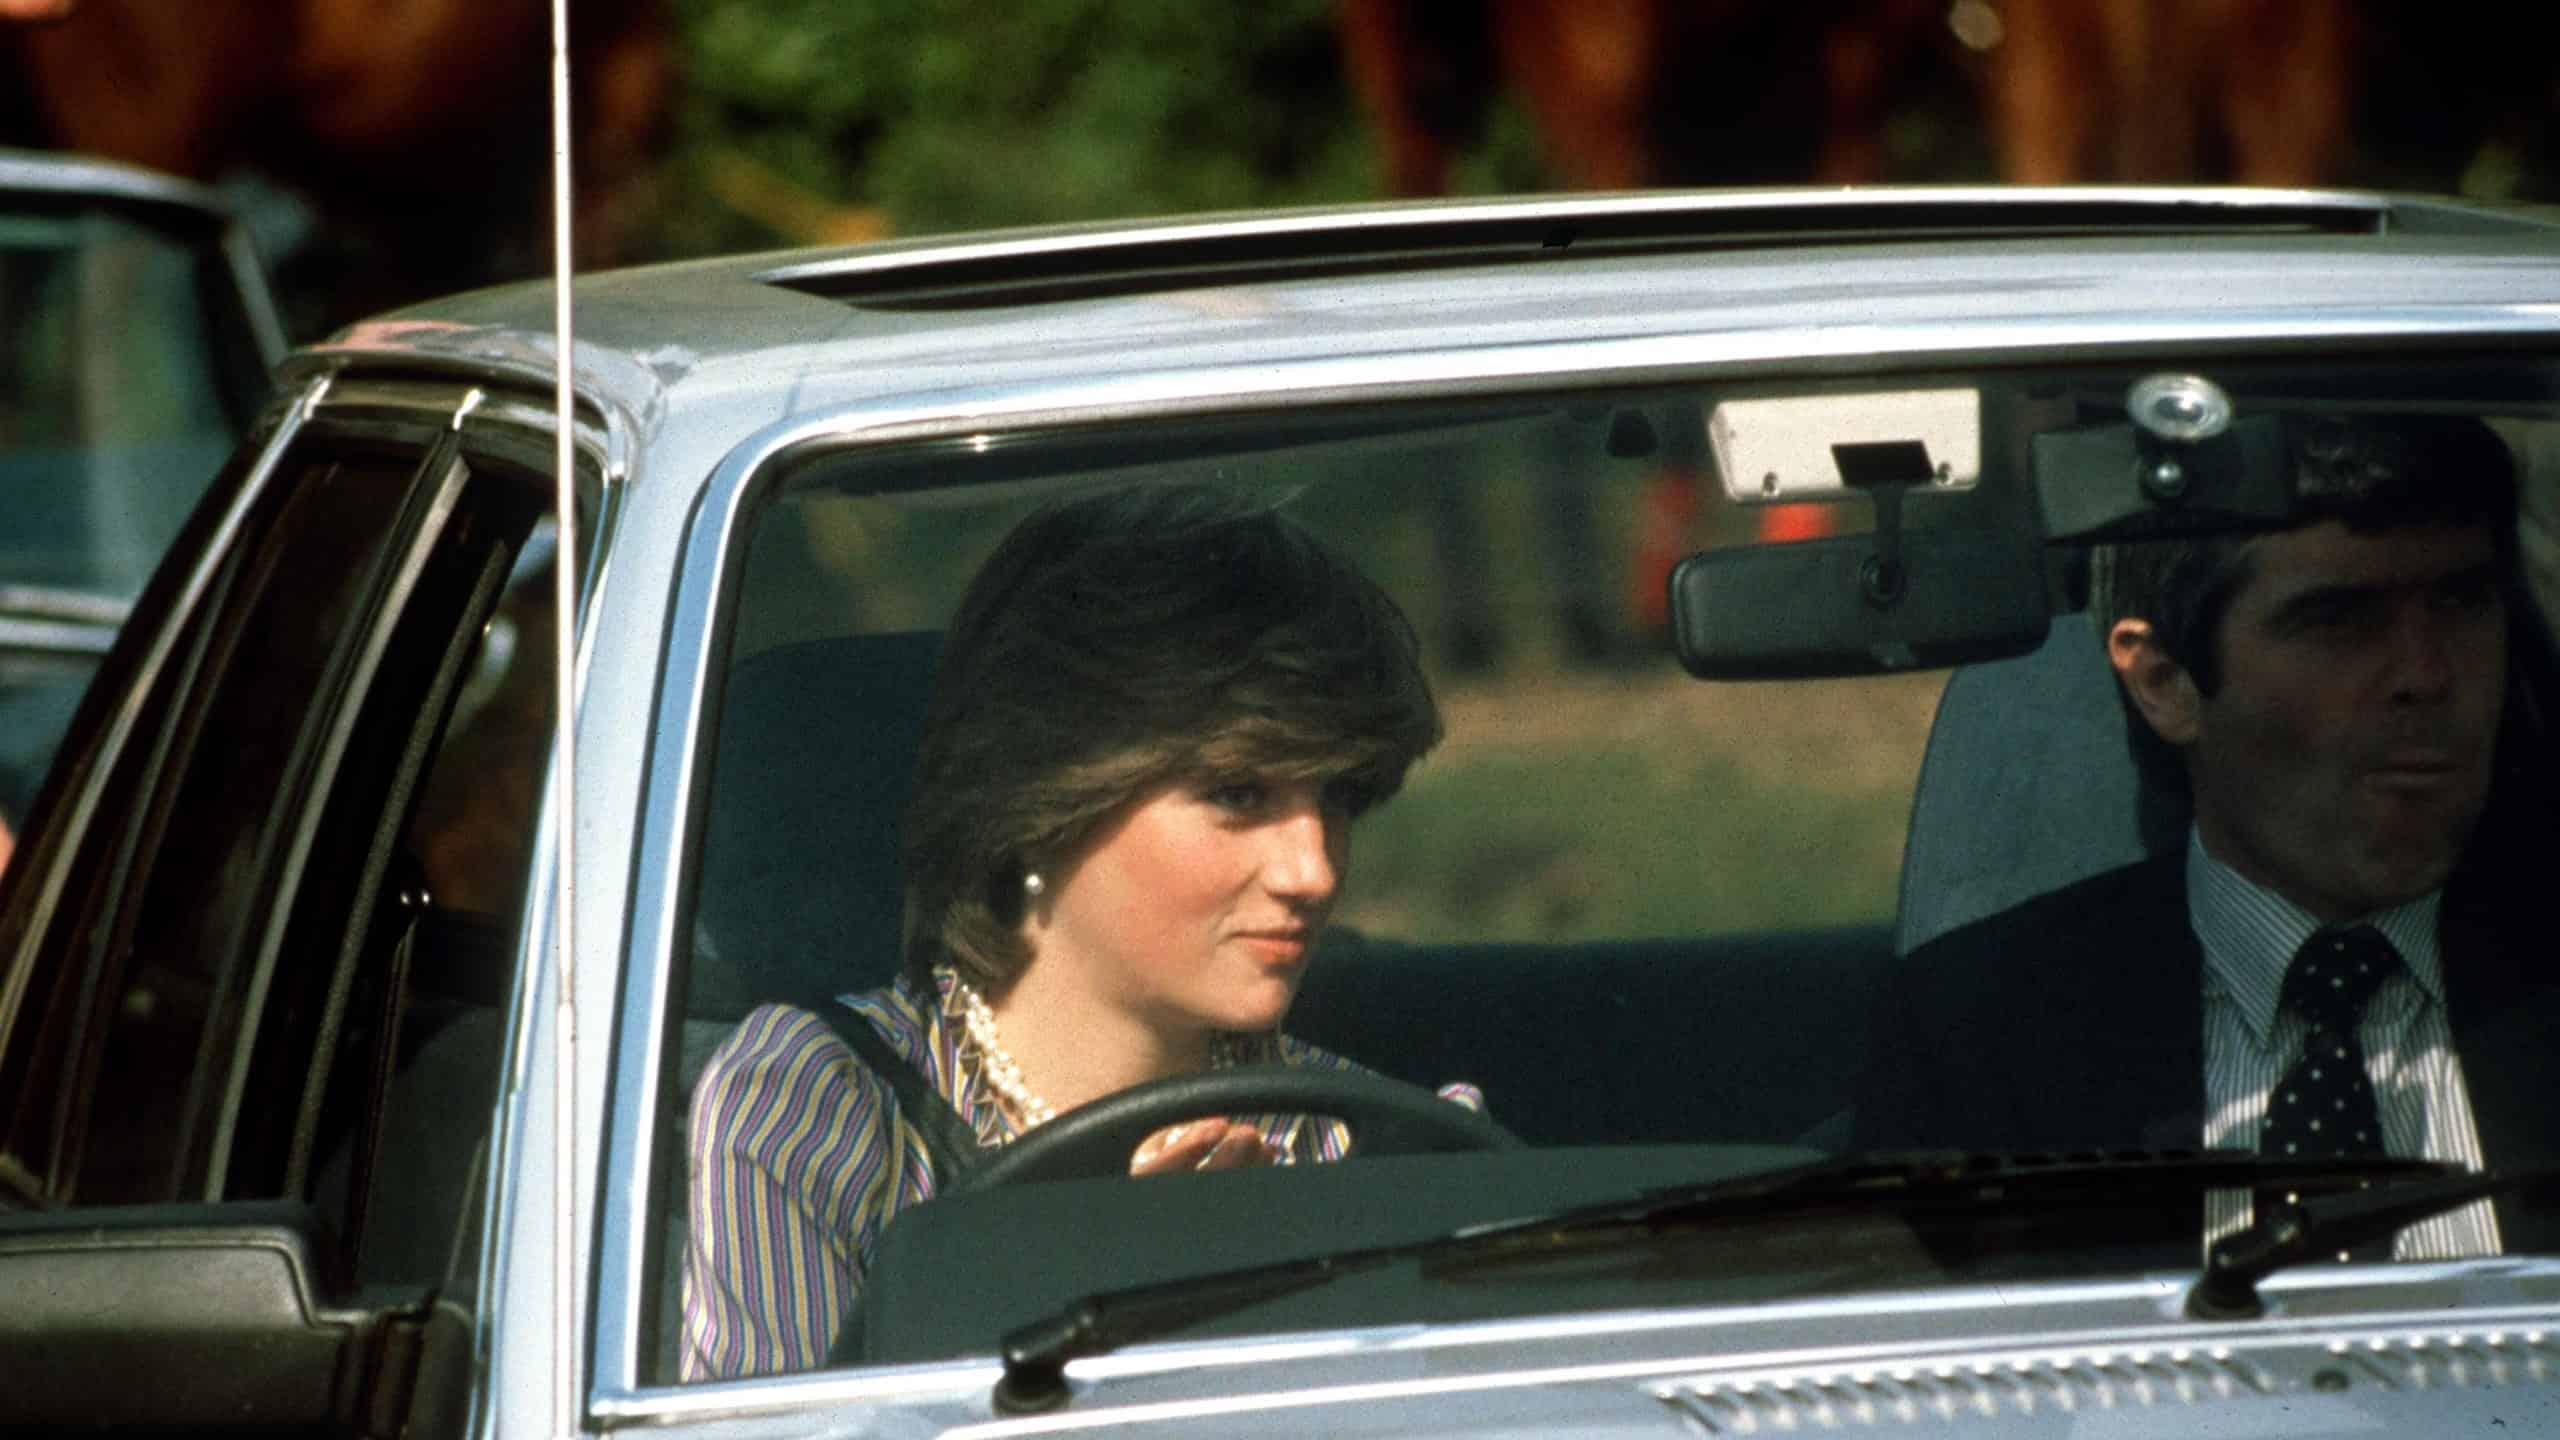 Prince Diana's 1981 Ford Escort Ghia